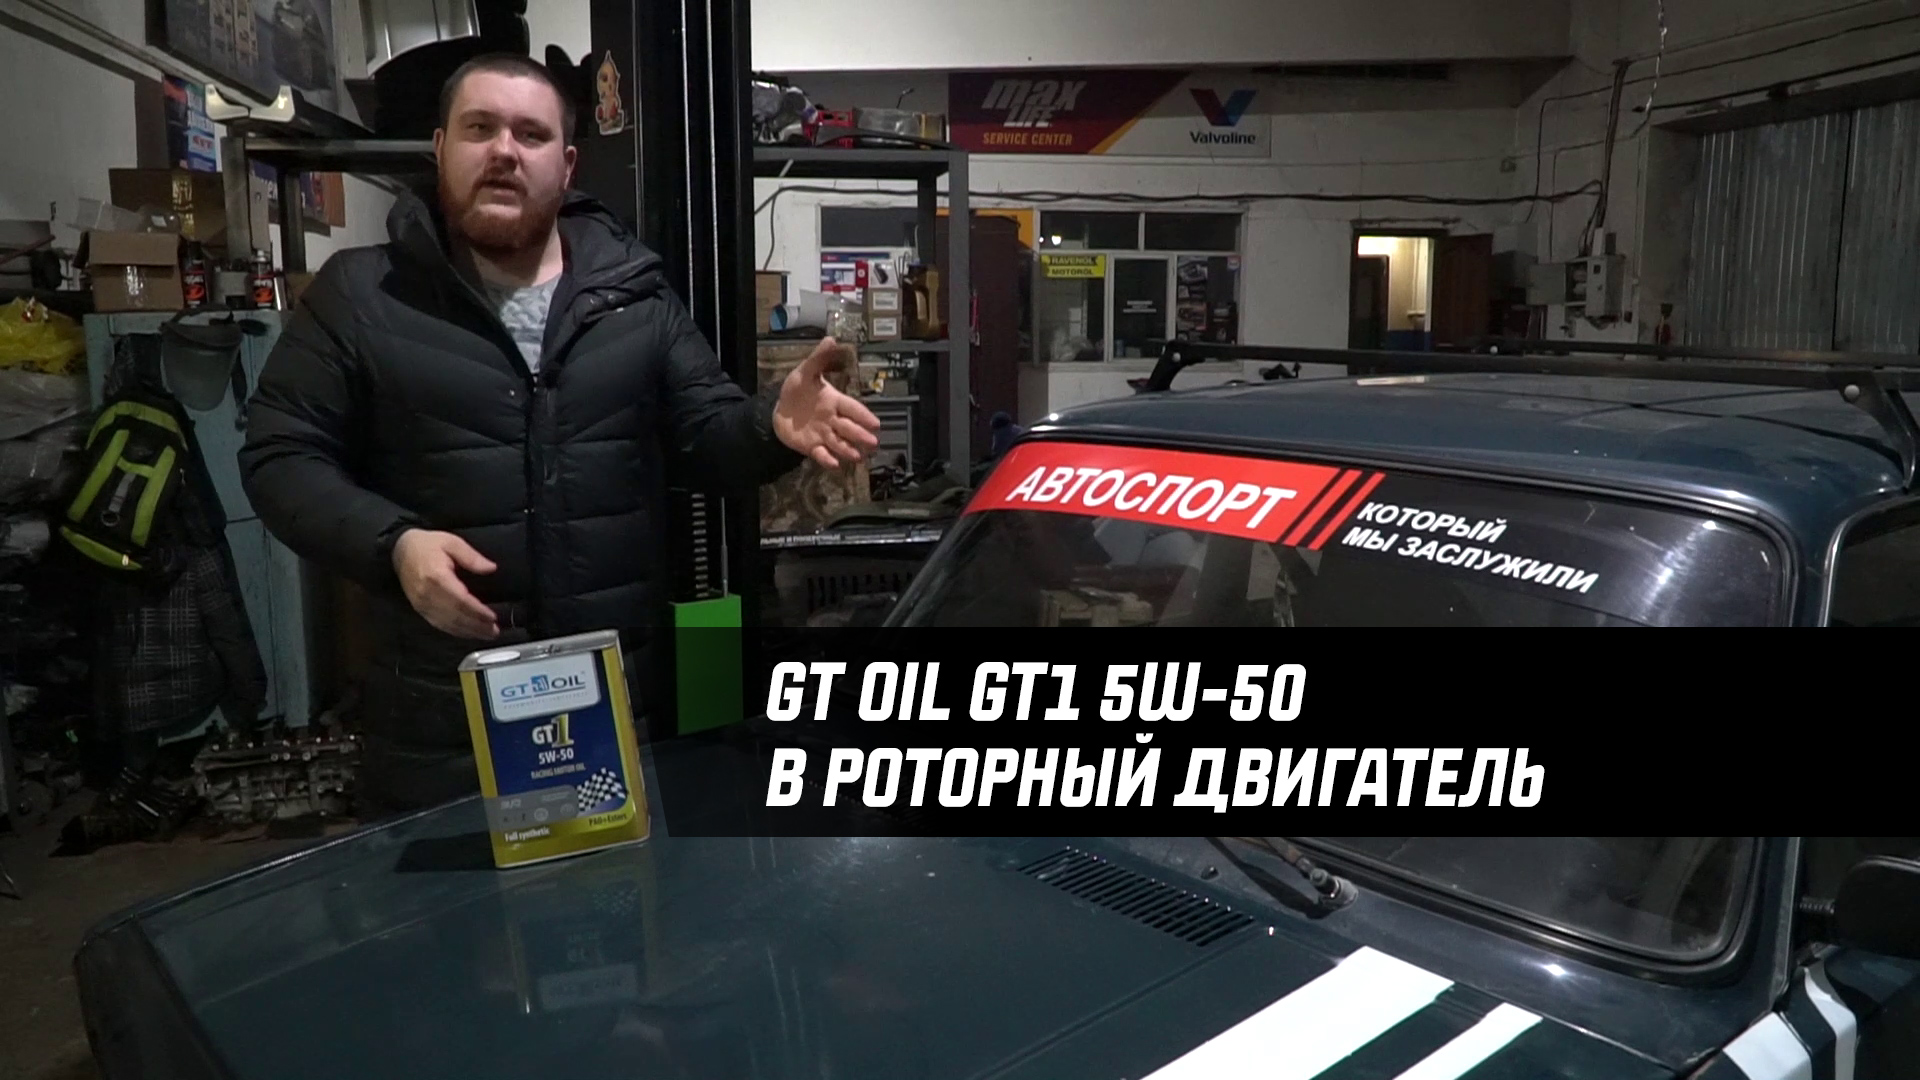 Новое масло - GT OIL GT1 5W-50 - для нового проекта SiberianBeard: жига на роторе